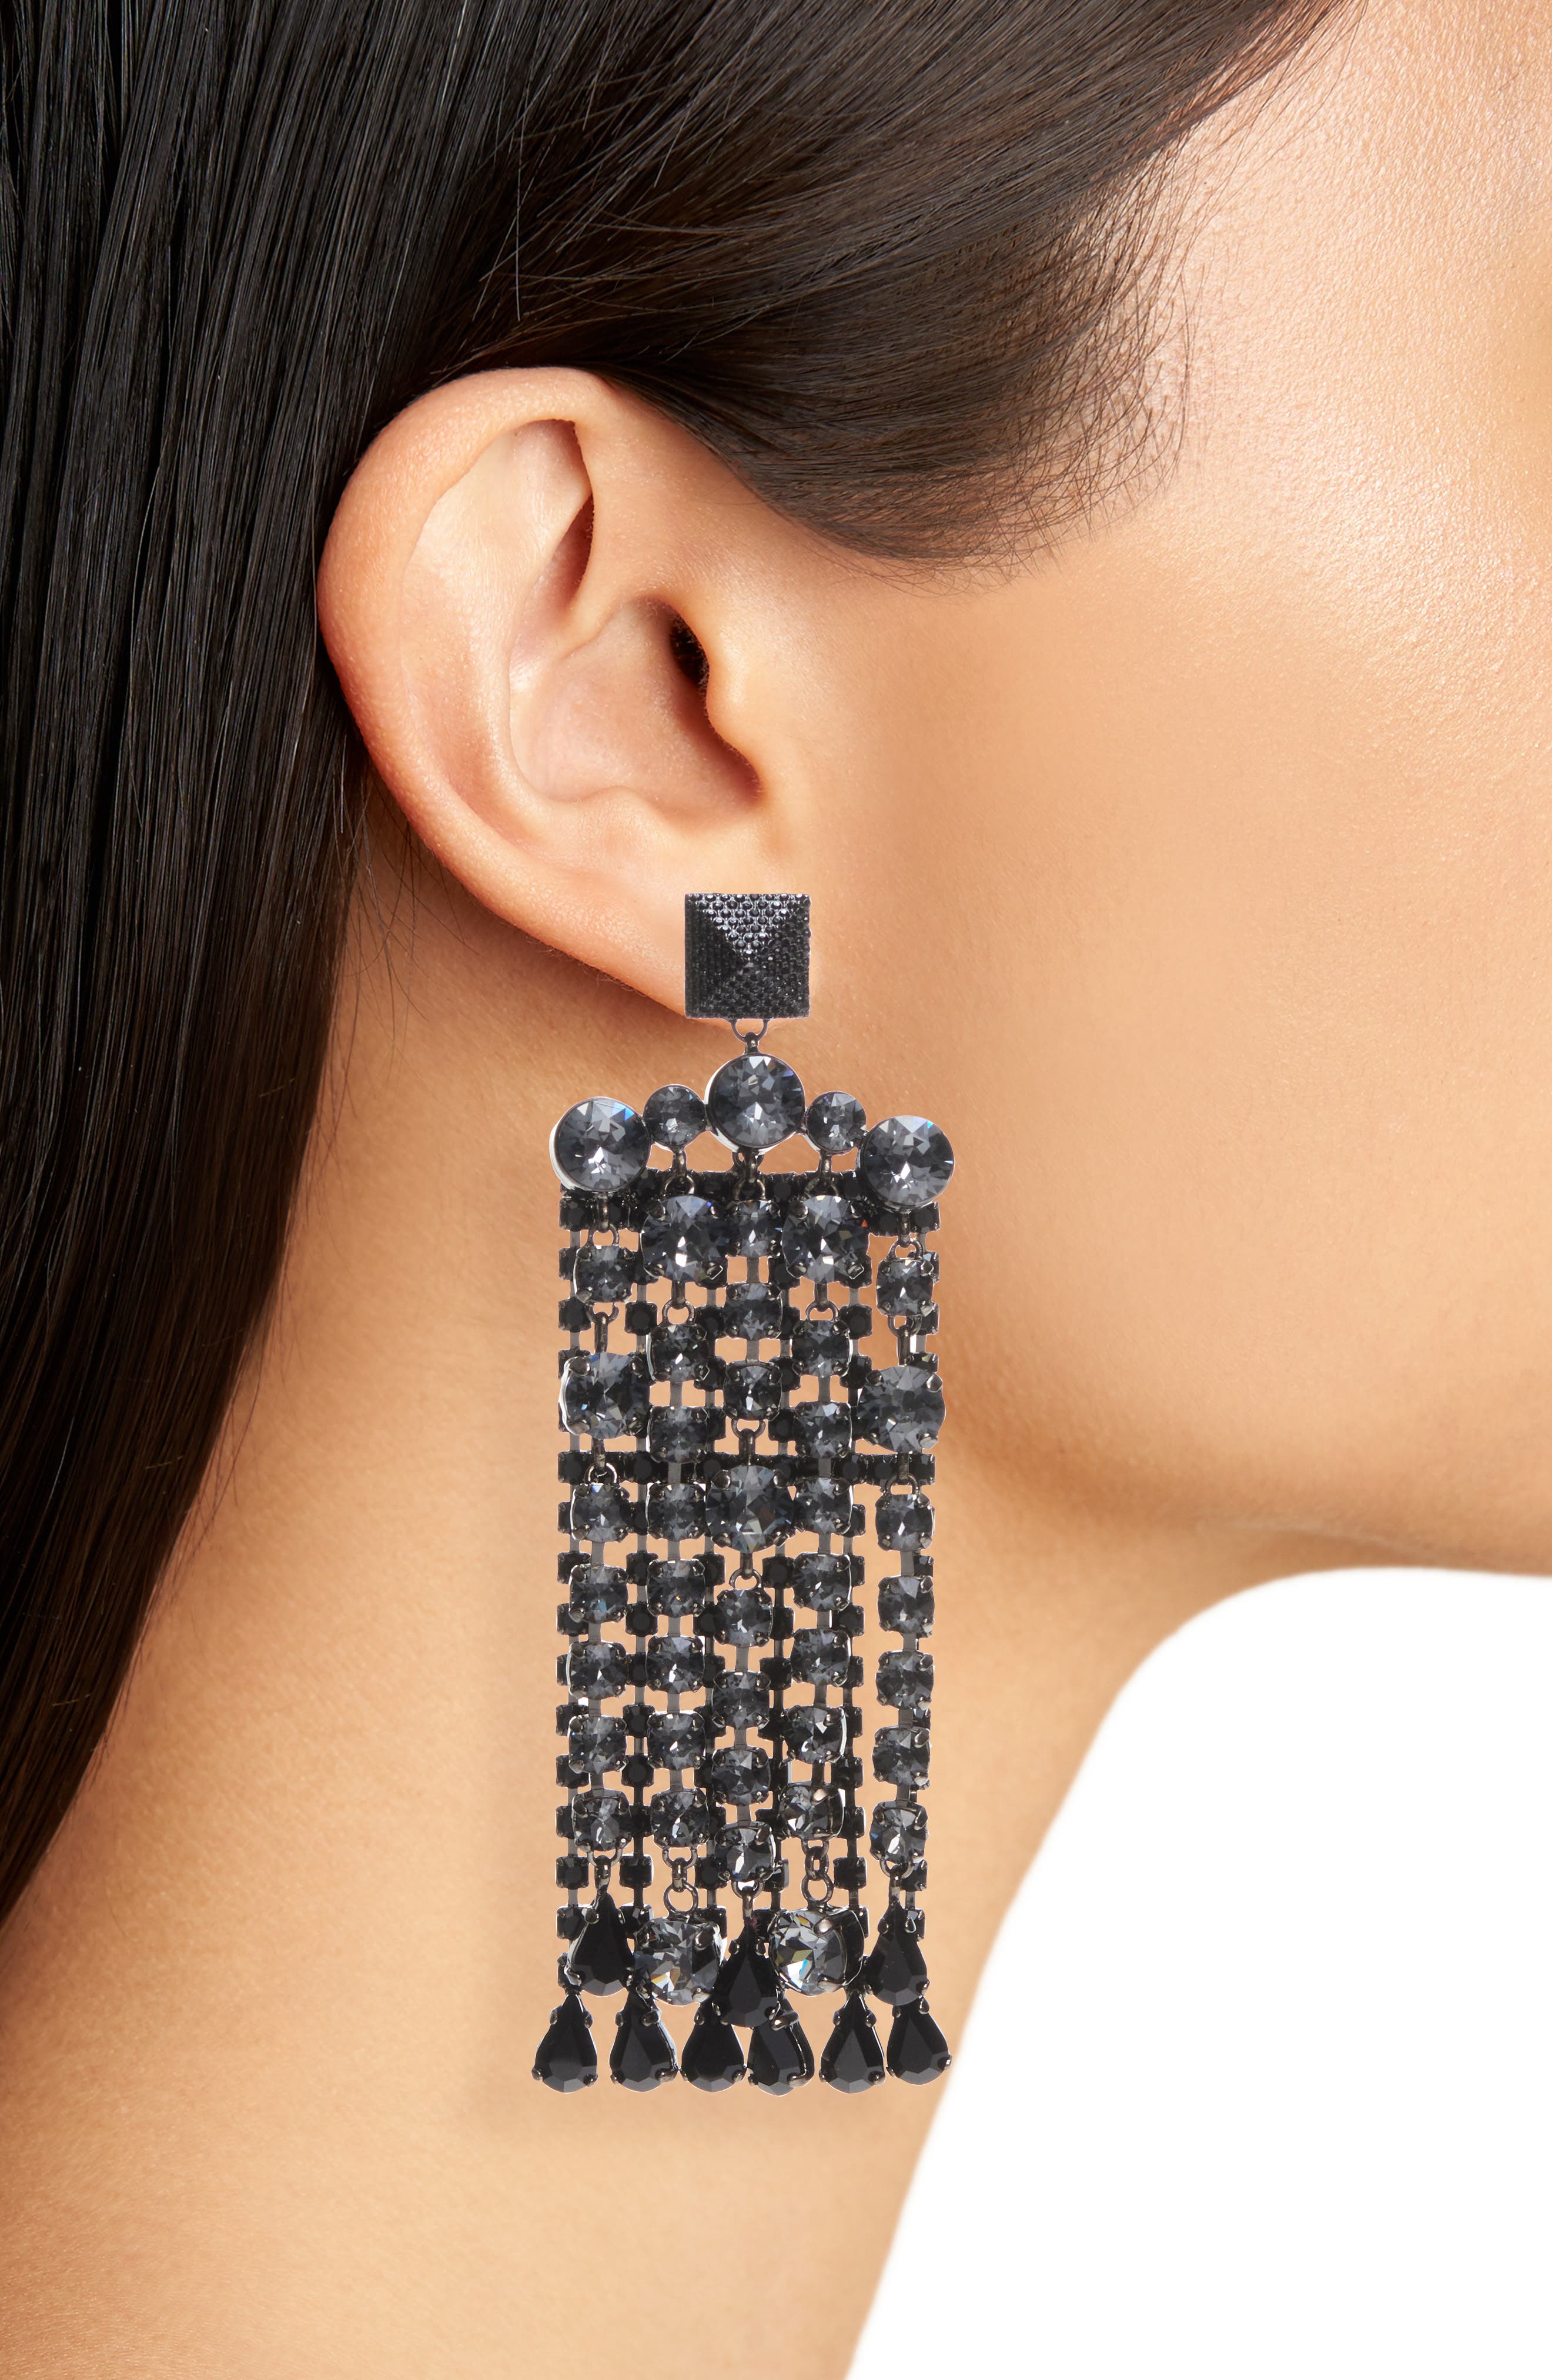 Valentino Garavani crystal-embellished earrings - Silver